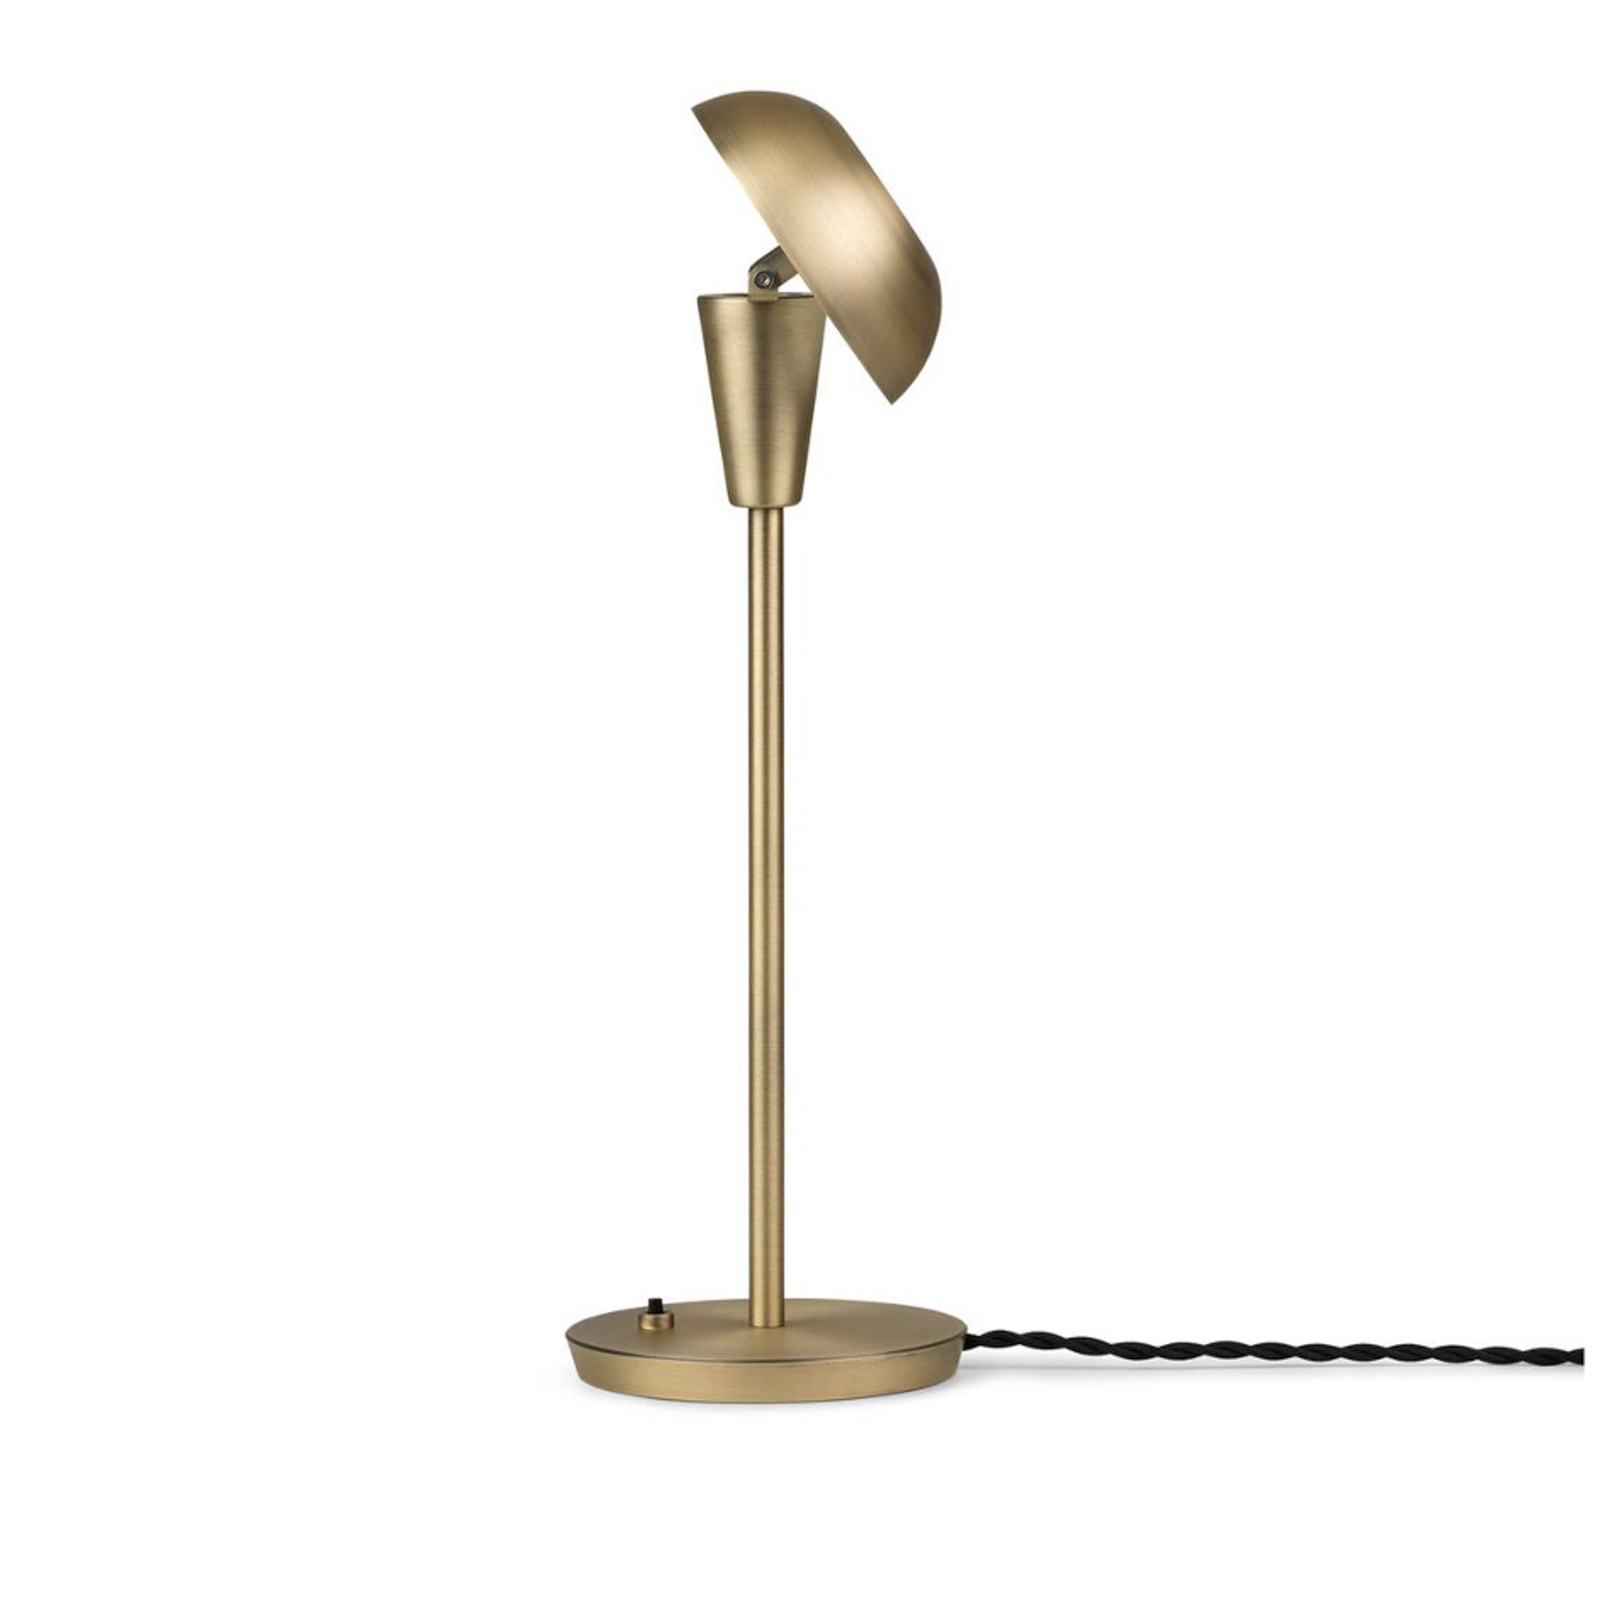 ferm LIVING "Tiny" stalinė lempa, žalvaris, 42,2 cm, pakreipiama